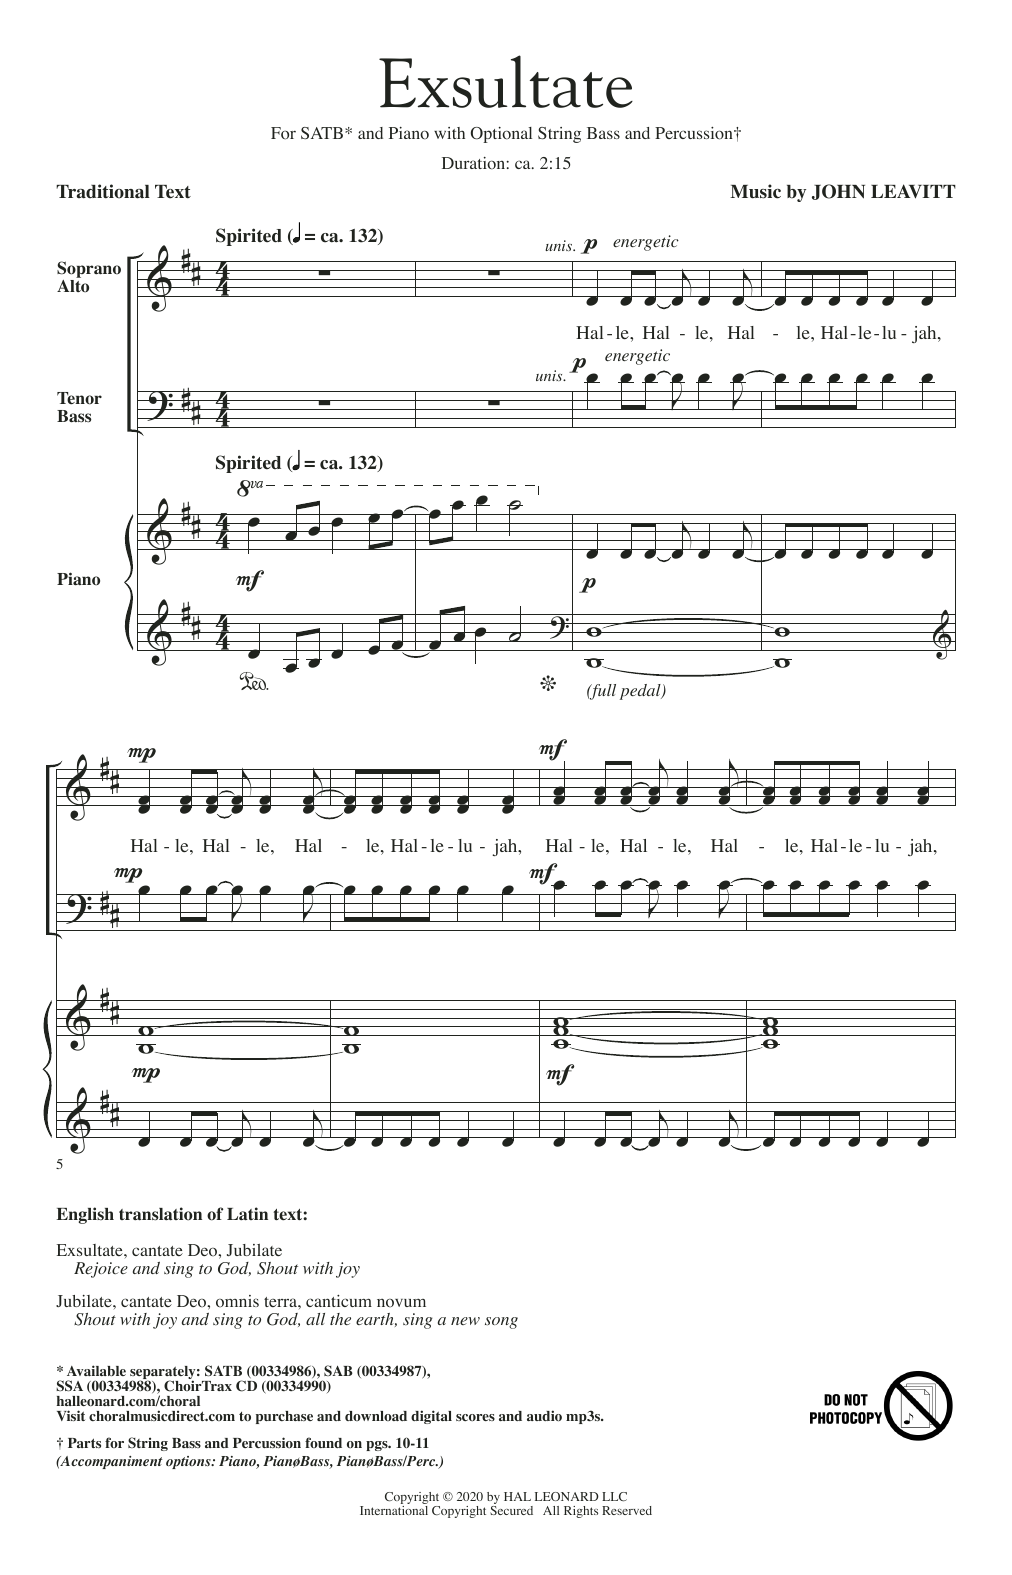 John Leavitt Exsultate Sheet Music Notes & Chords for SATB Choir - Download or Print PDF